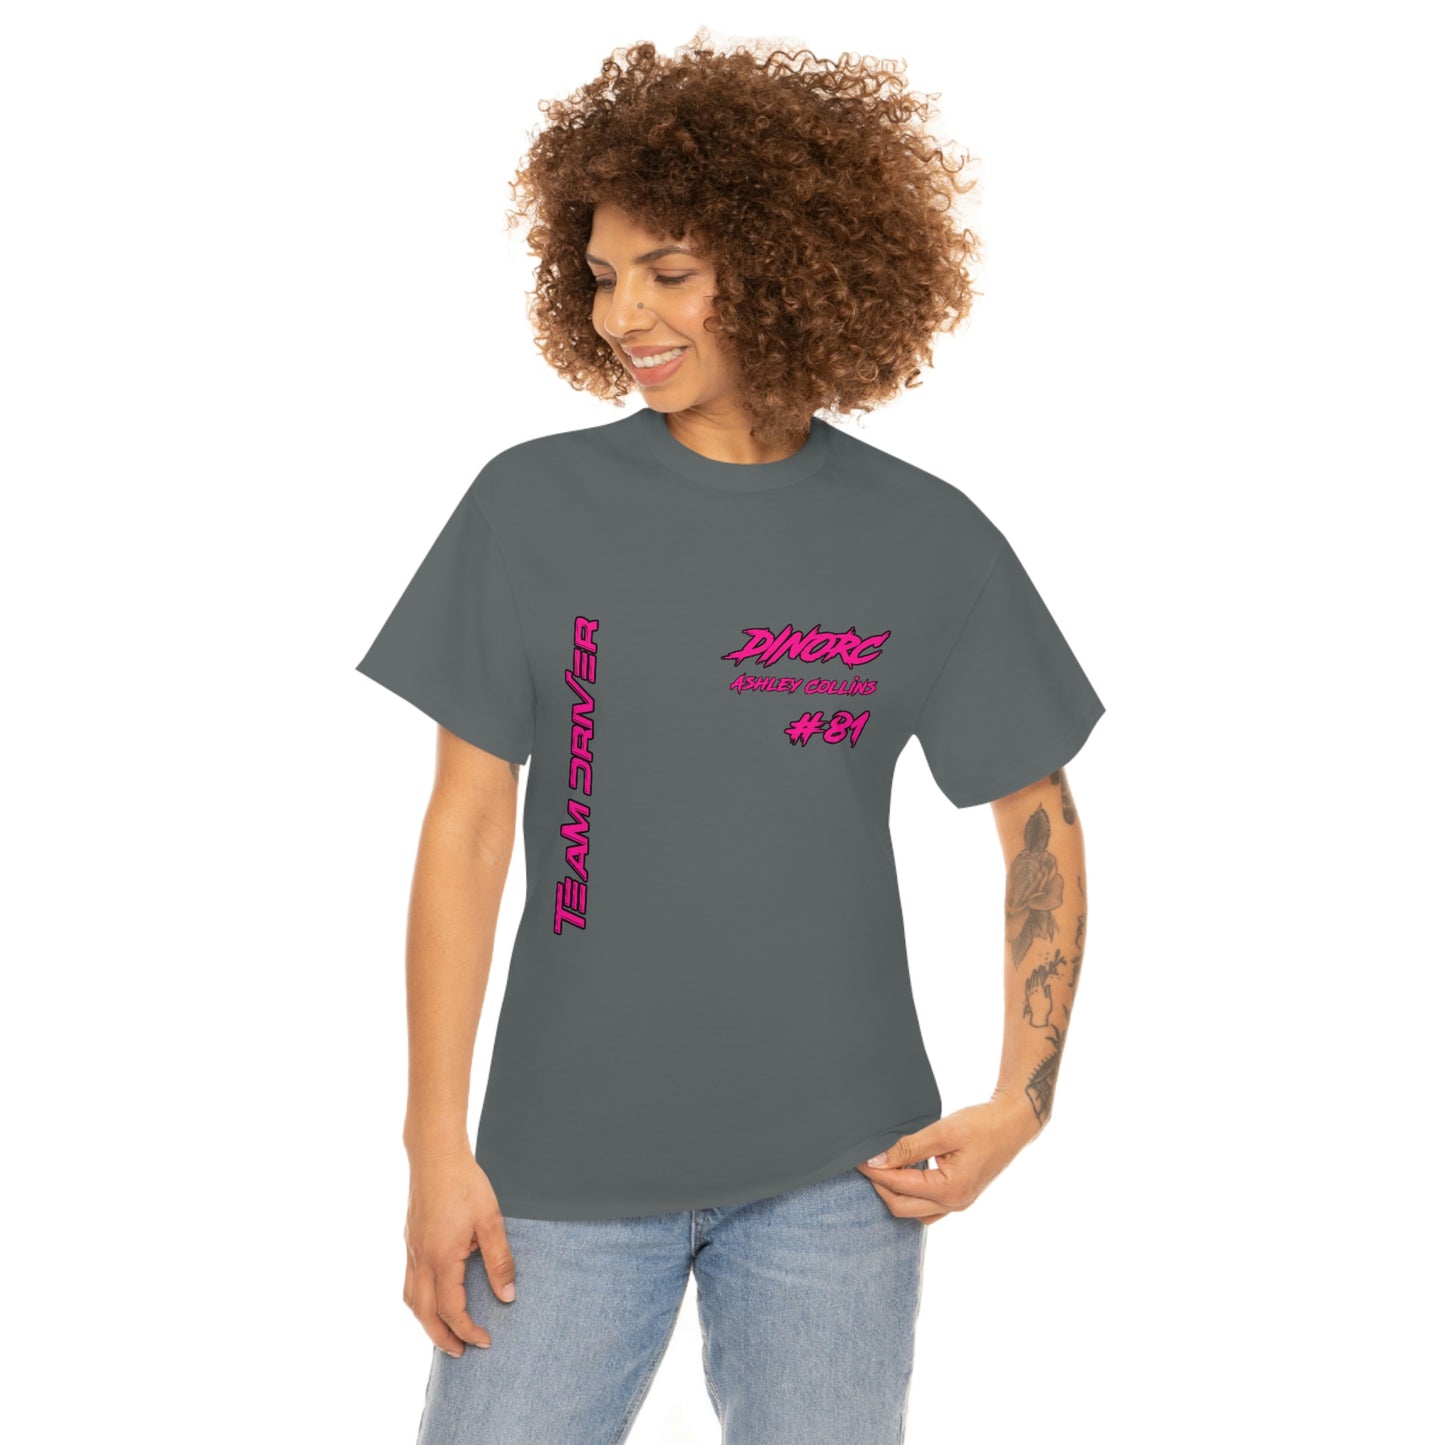 Team Driver Ashley Collins Dino's Divas Front and Back DinoRc Logo T-Shirt S-5x 5 colors